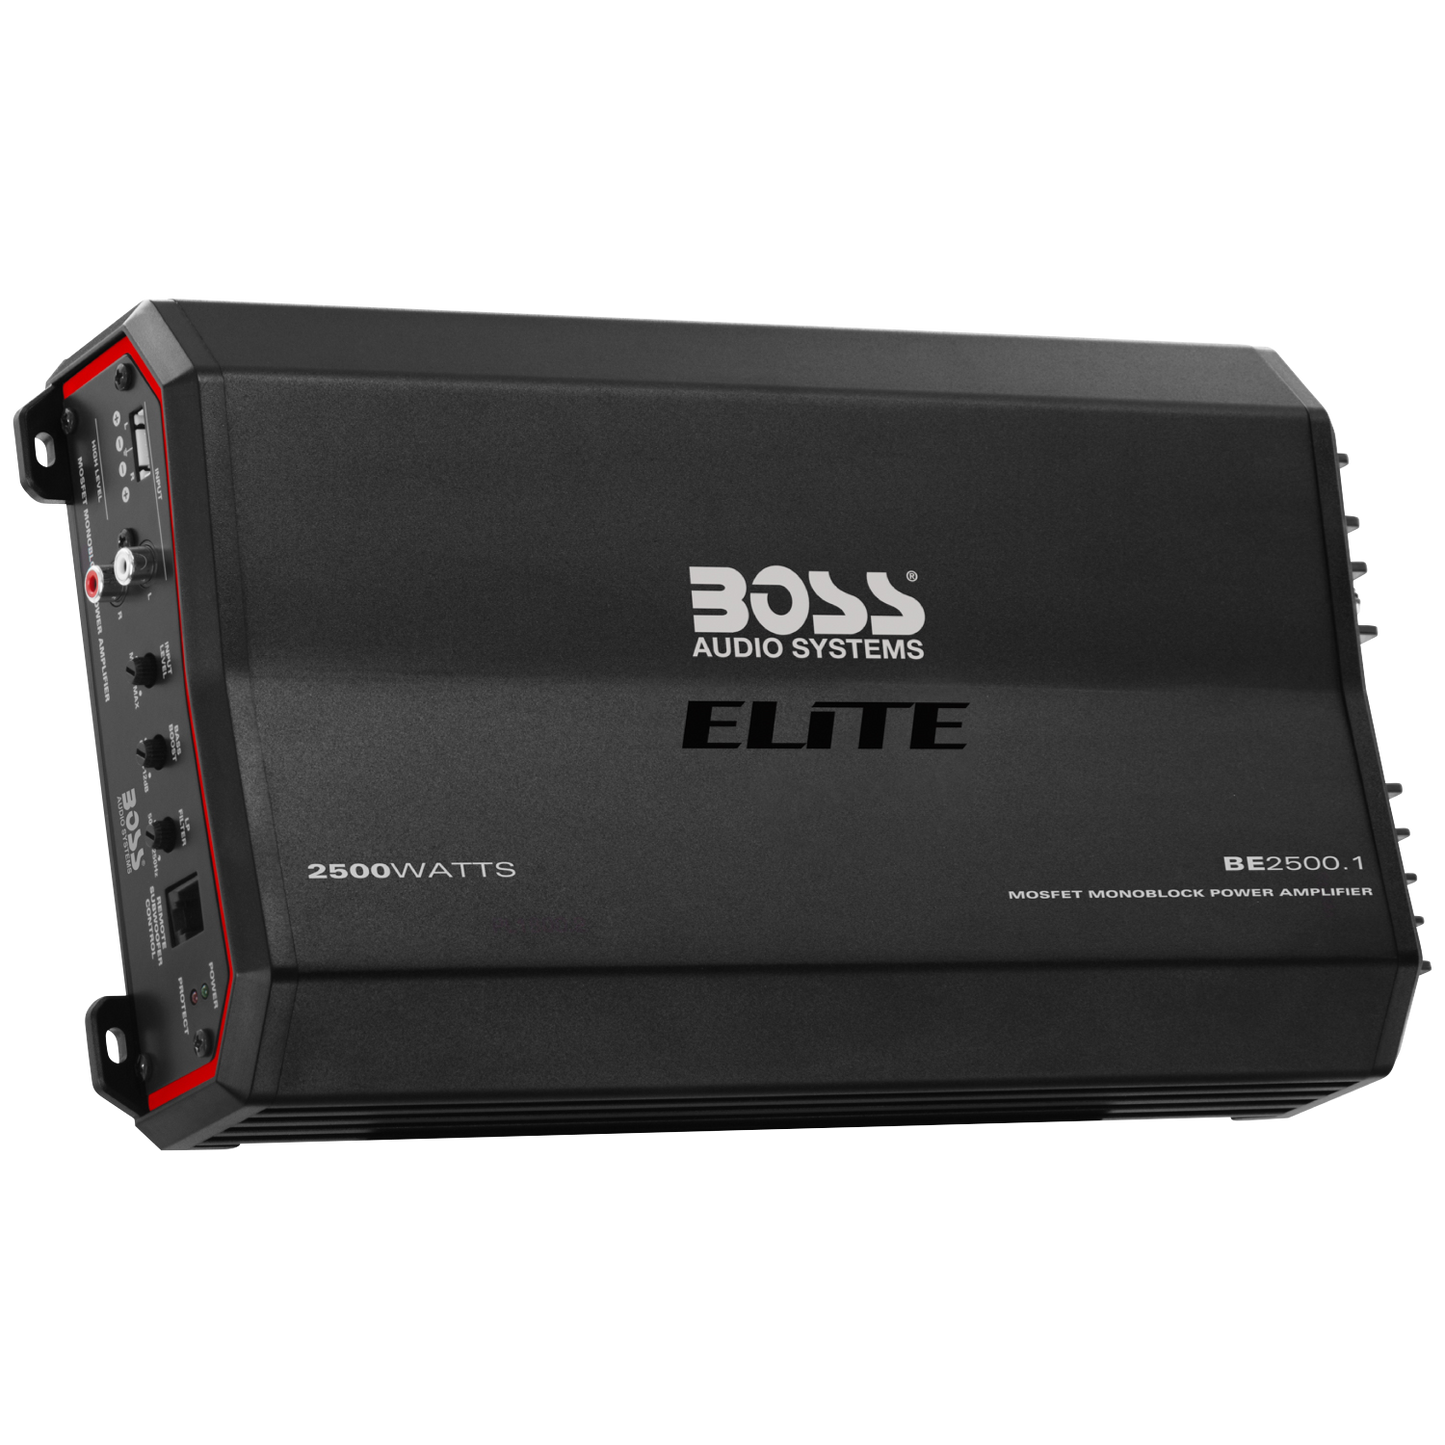 BOSS AUDIO ELITE Amplifiers BE2500.1